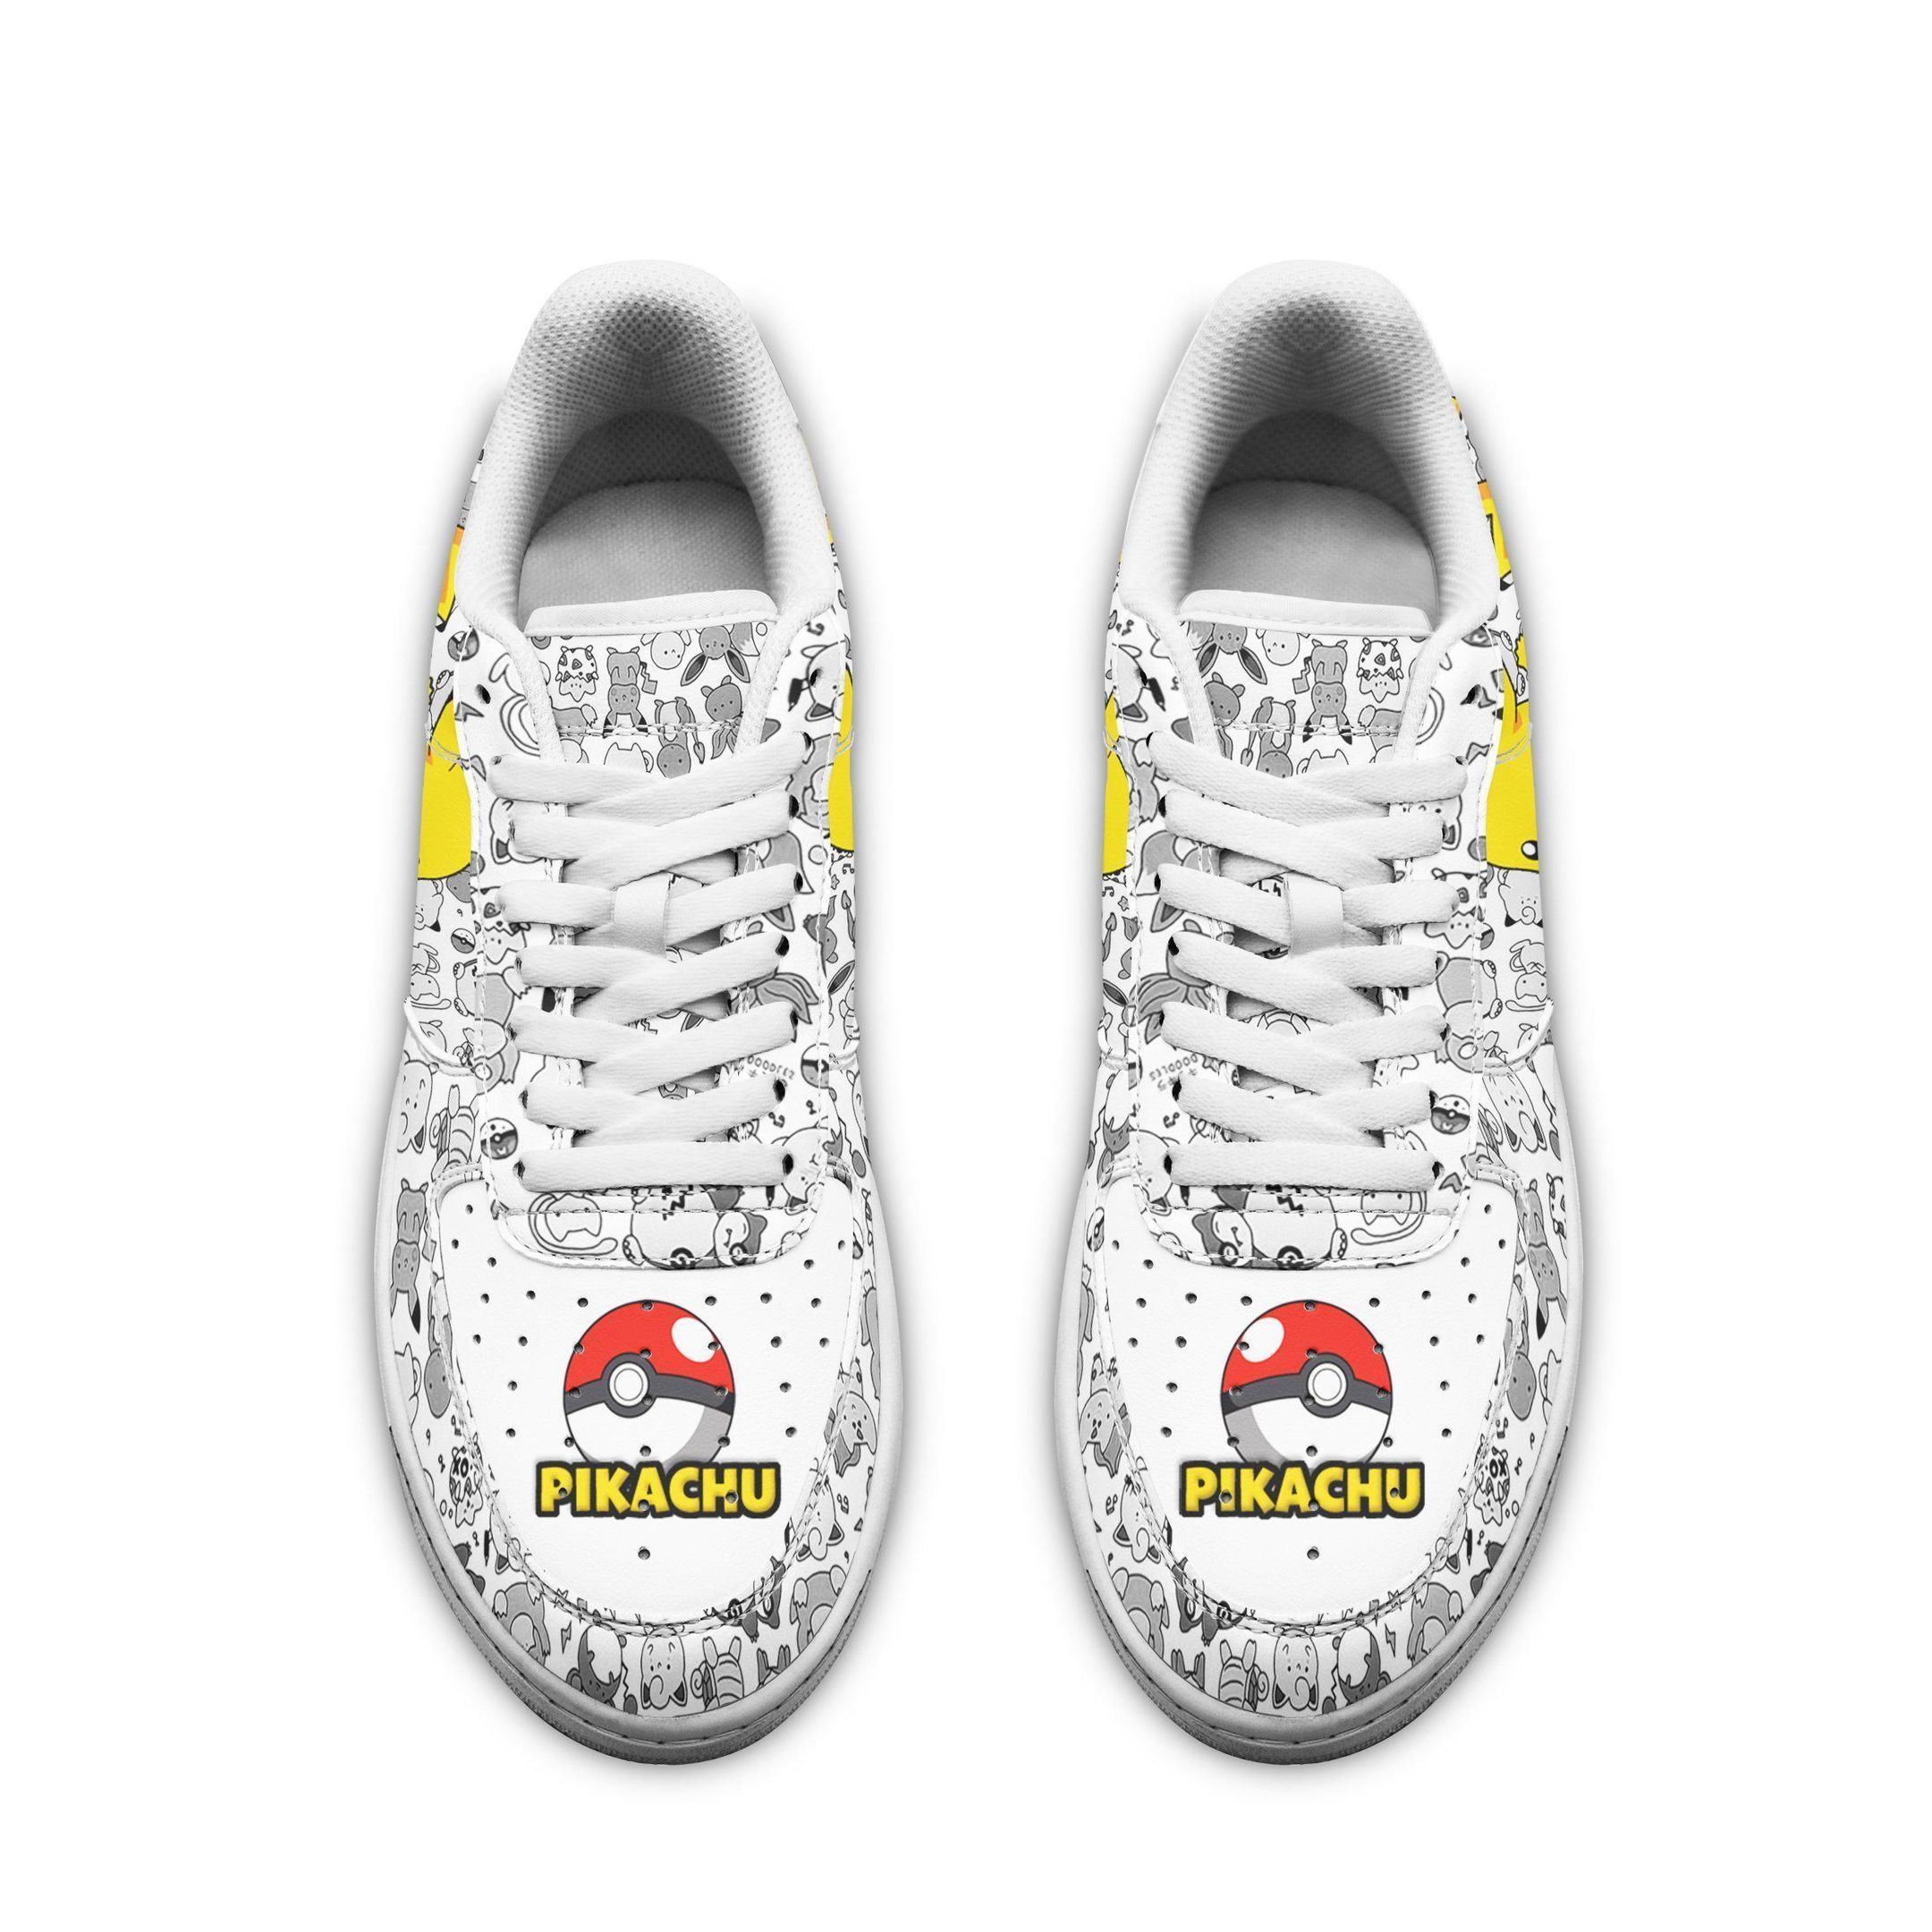 Pikachu Air Shoes Pokemon Shoes Fan Gift Idea GO1012